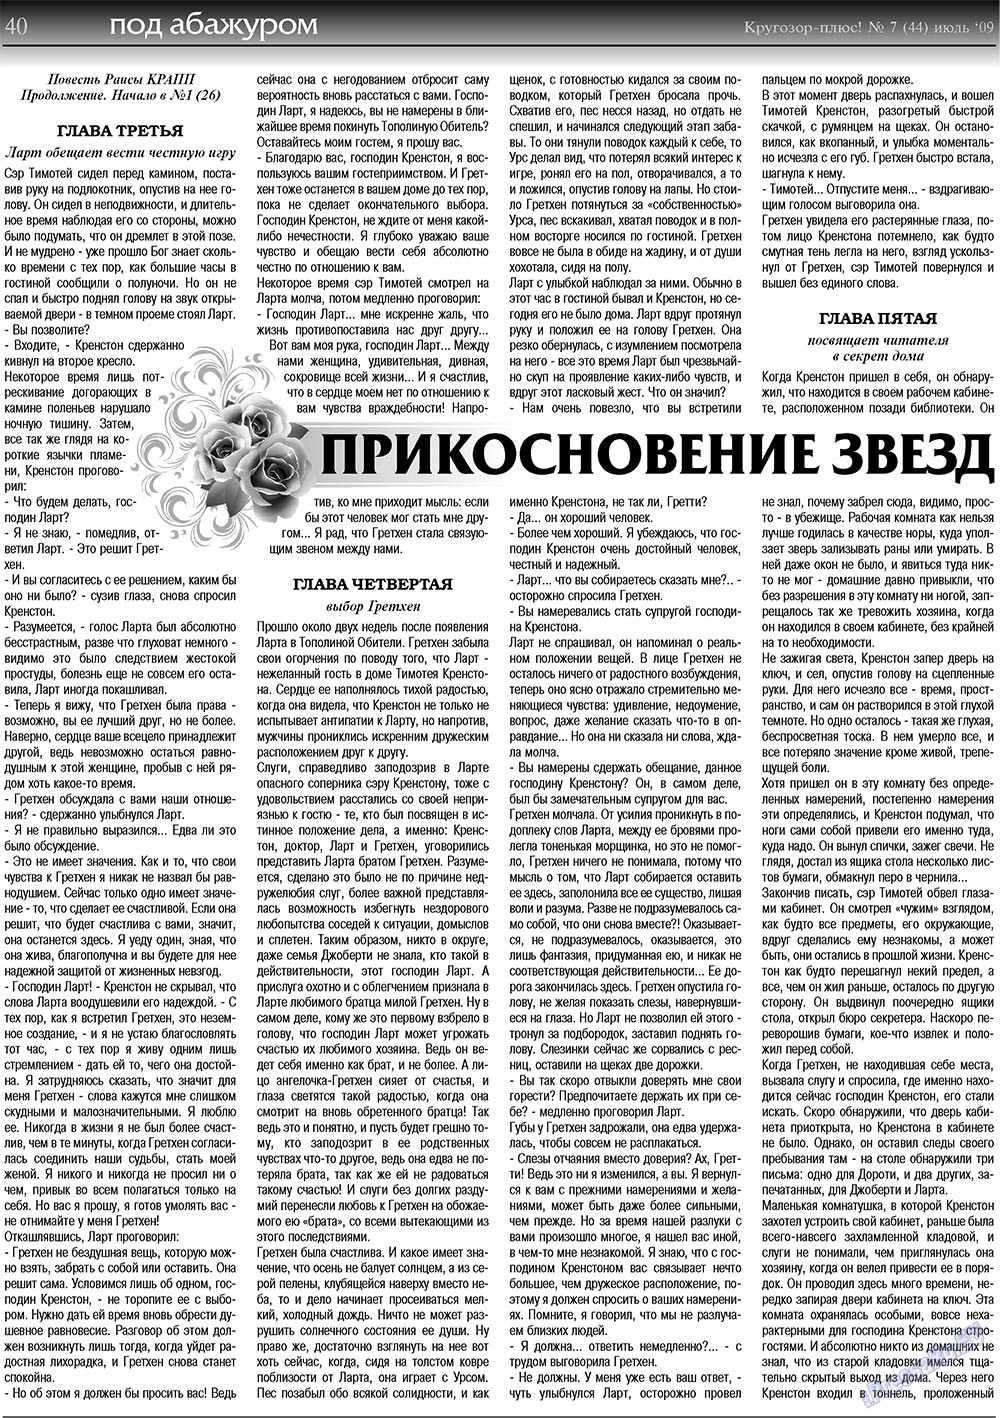 Кругозор плюс! (газета). 2009 год, номер 7, стр. 40